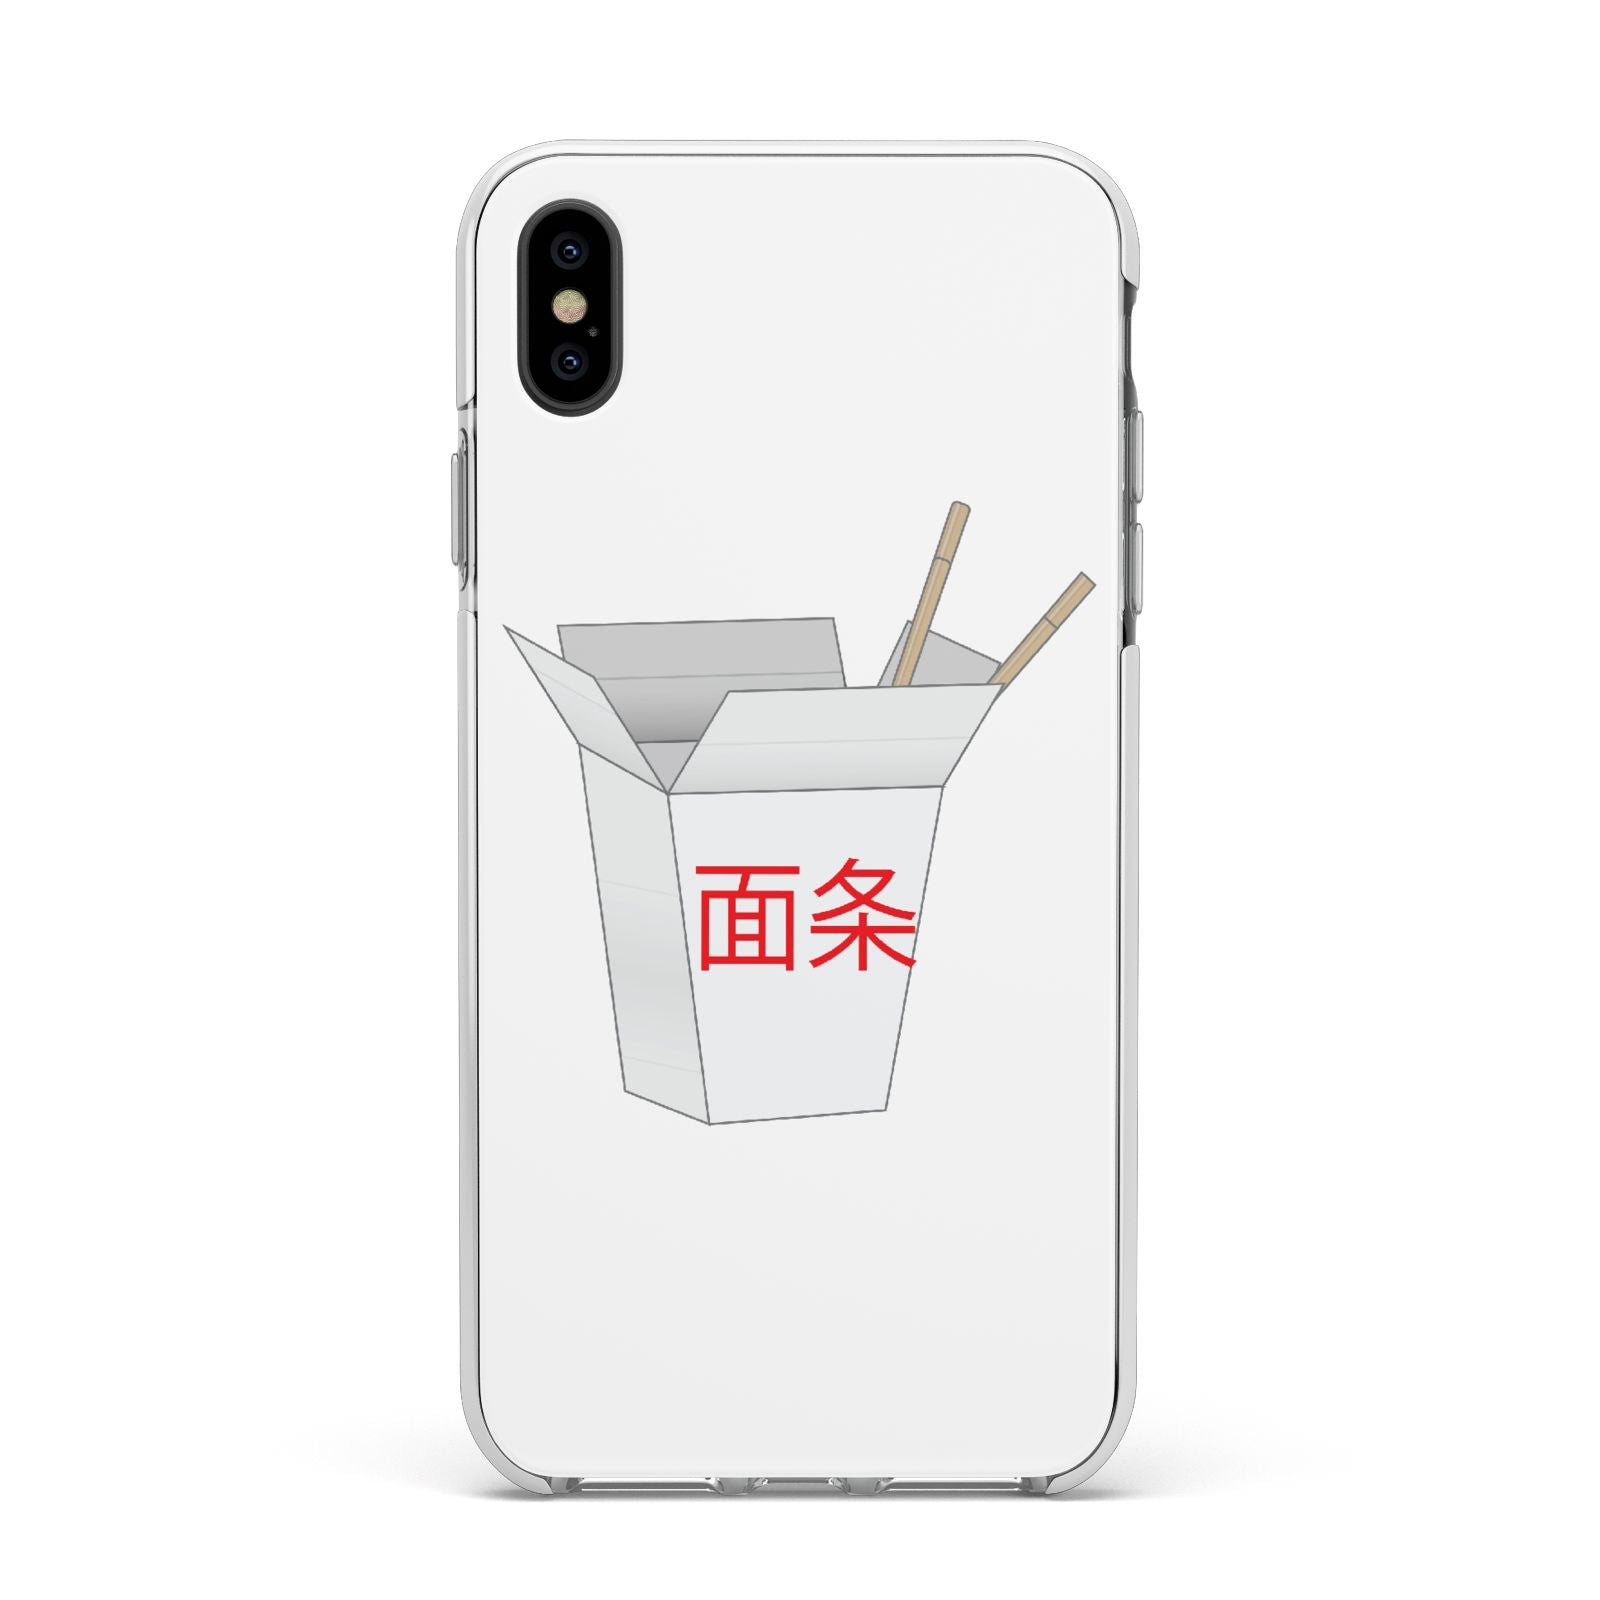 Chinese Takeaway Box Apple iPhone Xs Max Impact Case White Edge on Black Phone